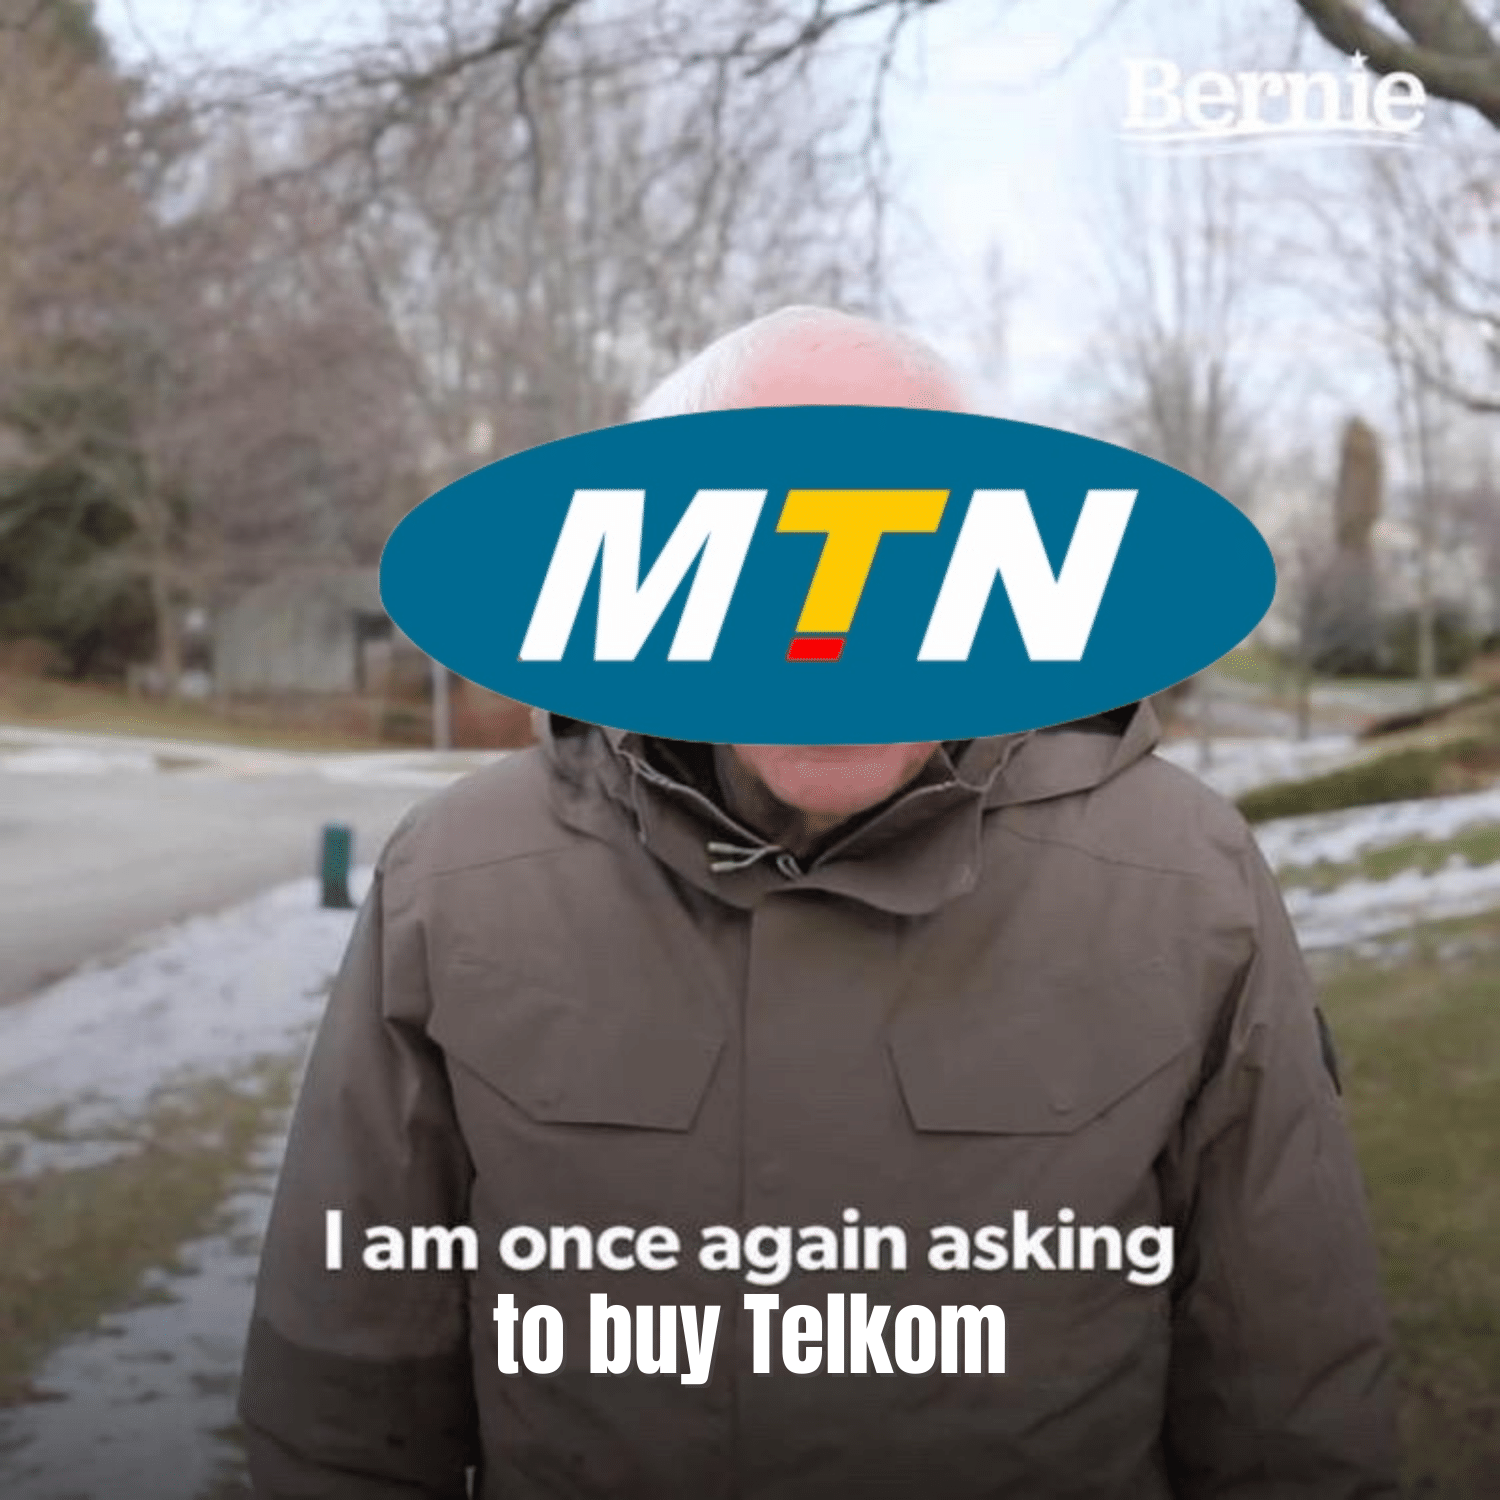 Bernie Telkom